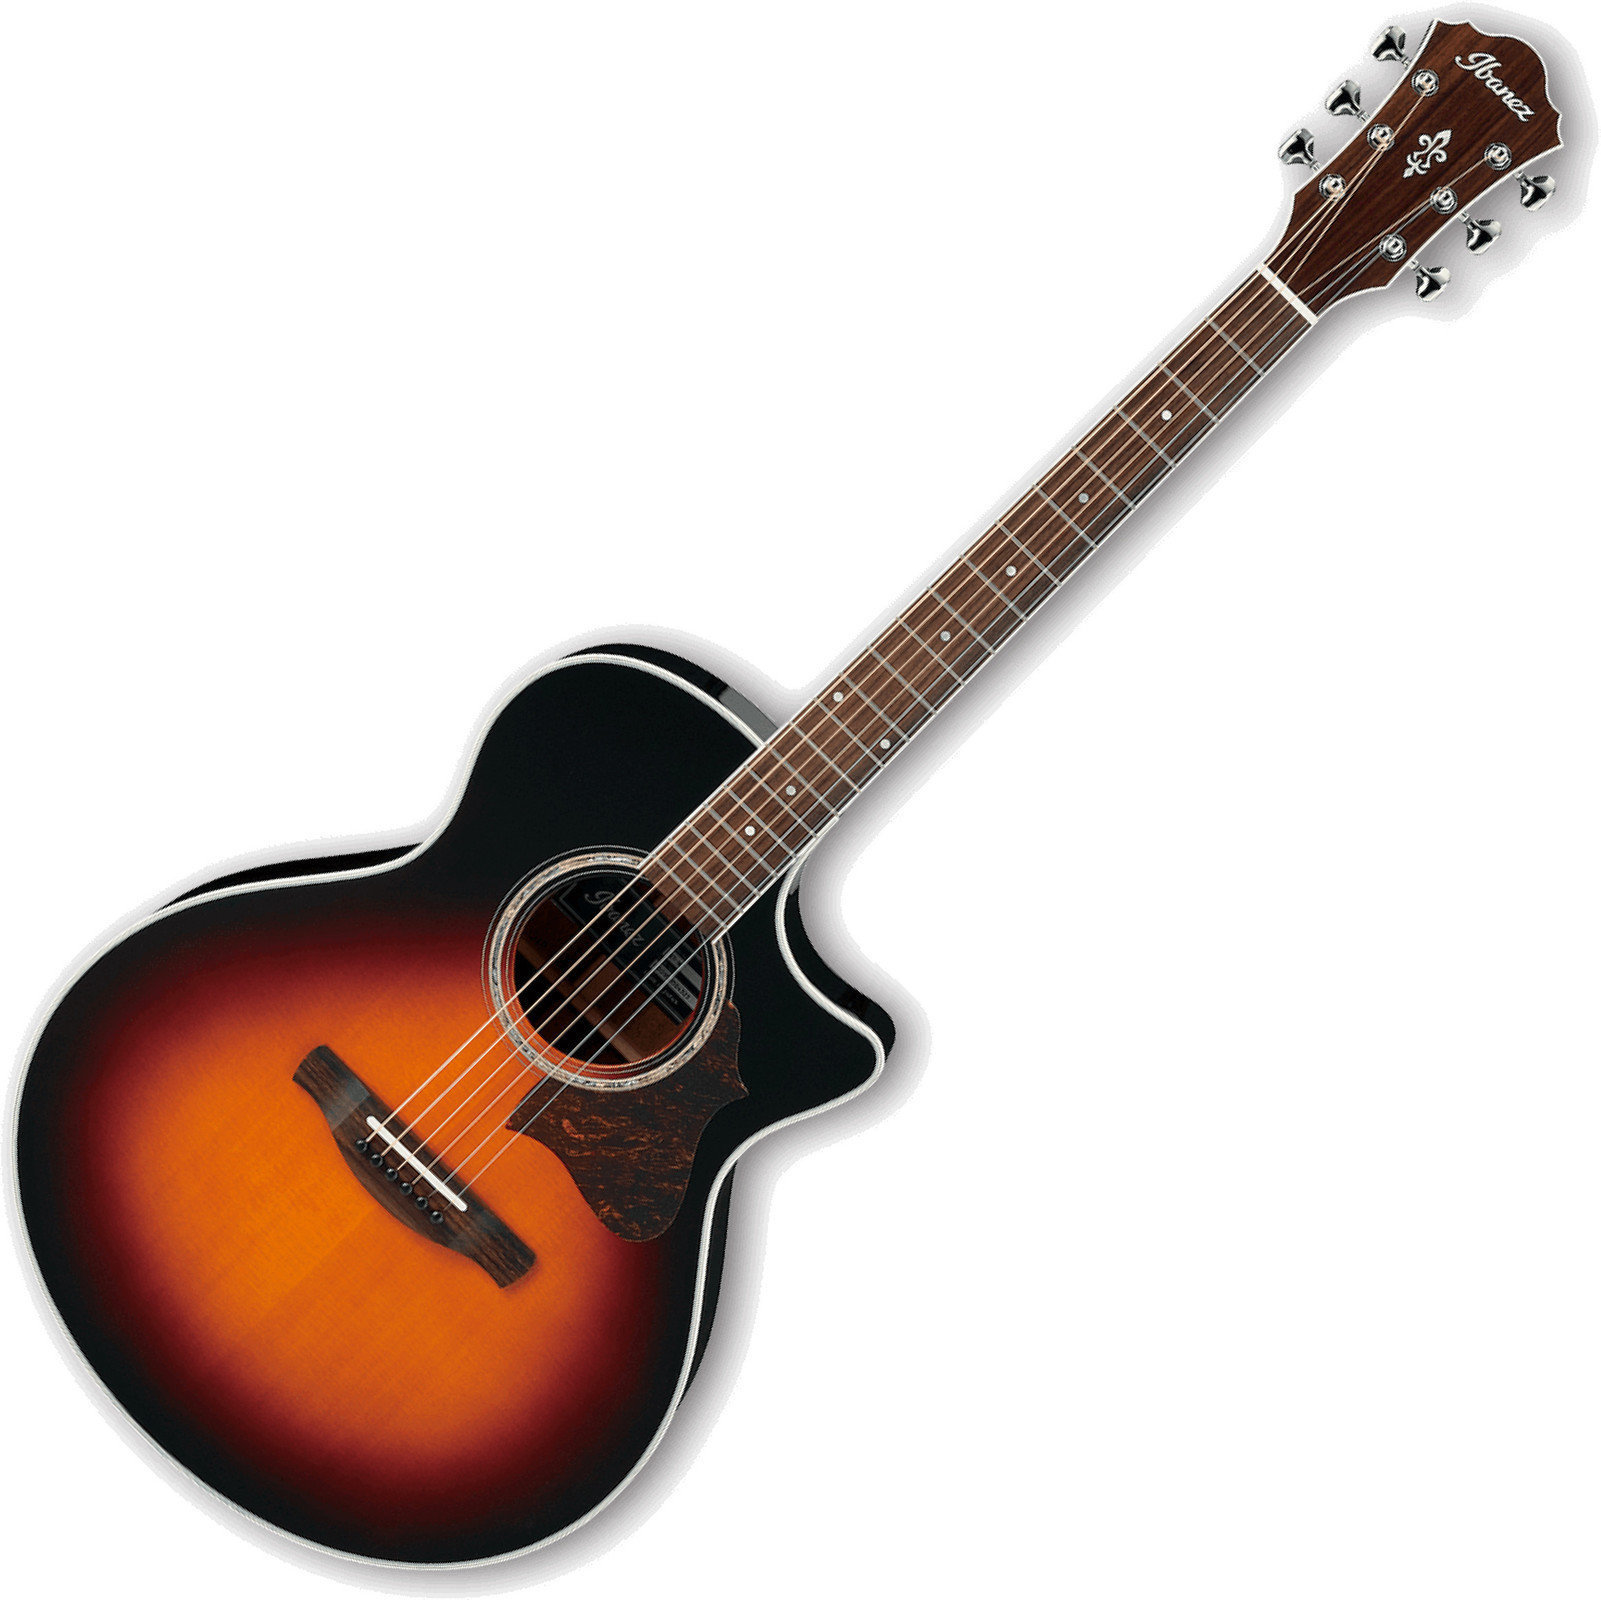 Elektroakustinen kitara Ibanez AE800 Antique Sunburst High Gloss